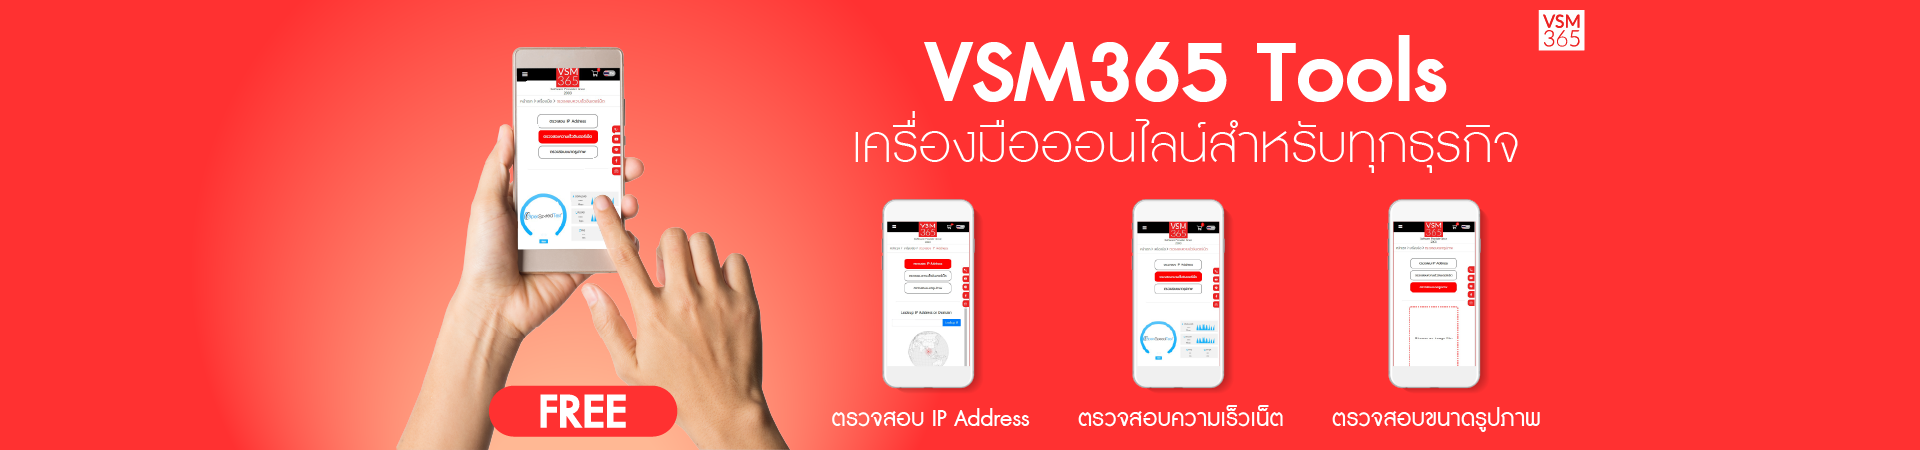 VSM365 Tools